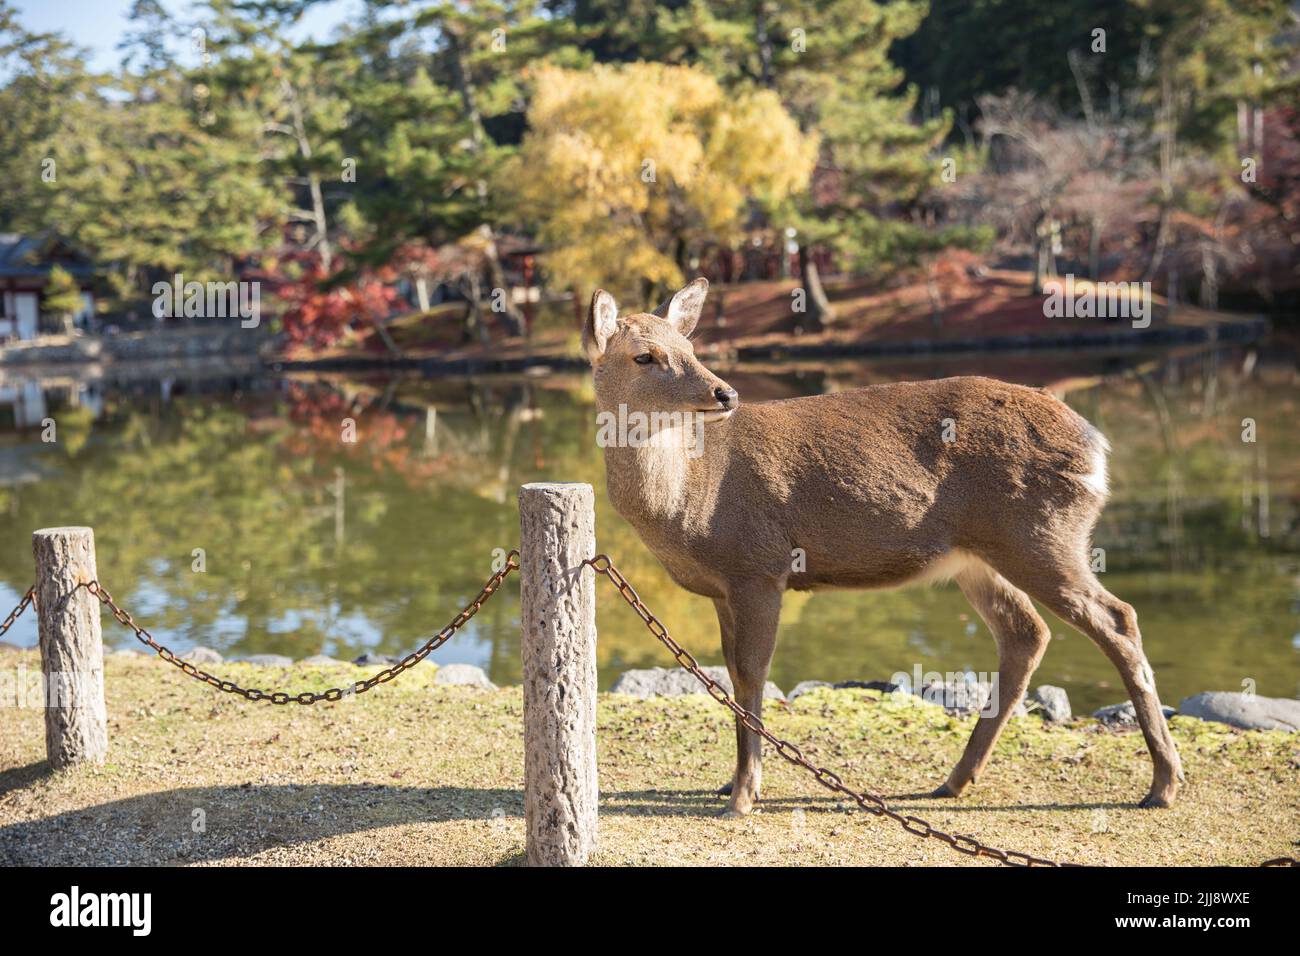 Wild Deer in Nara Park popular travel location in Kansai region of Japan. Stock Photo